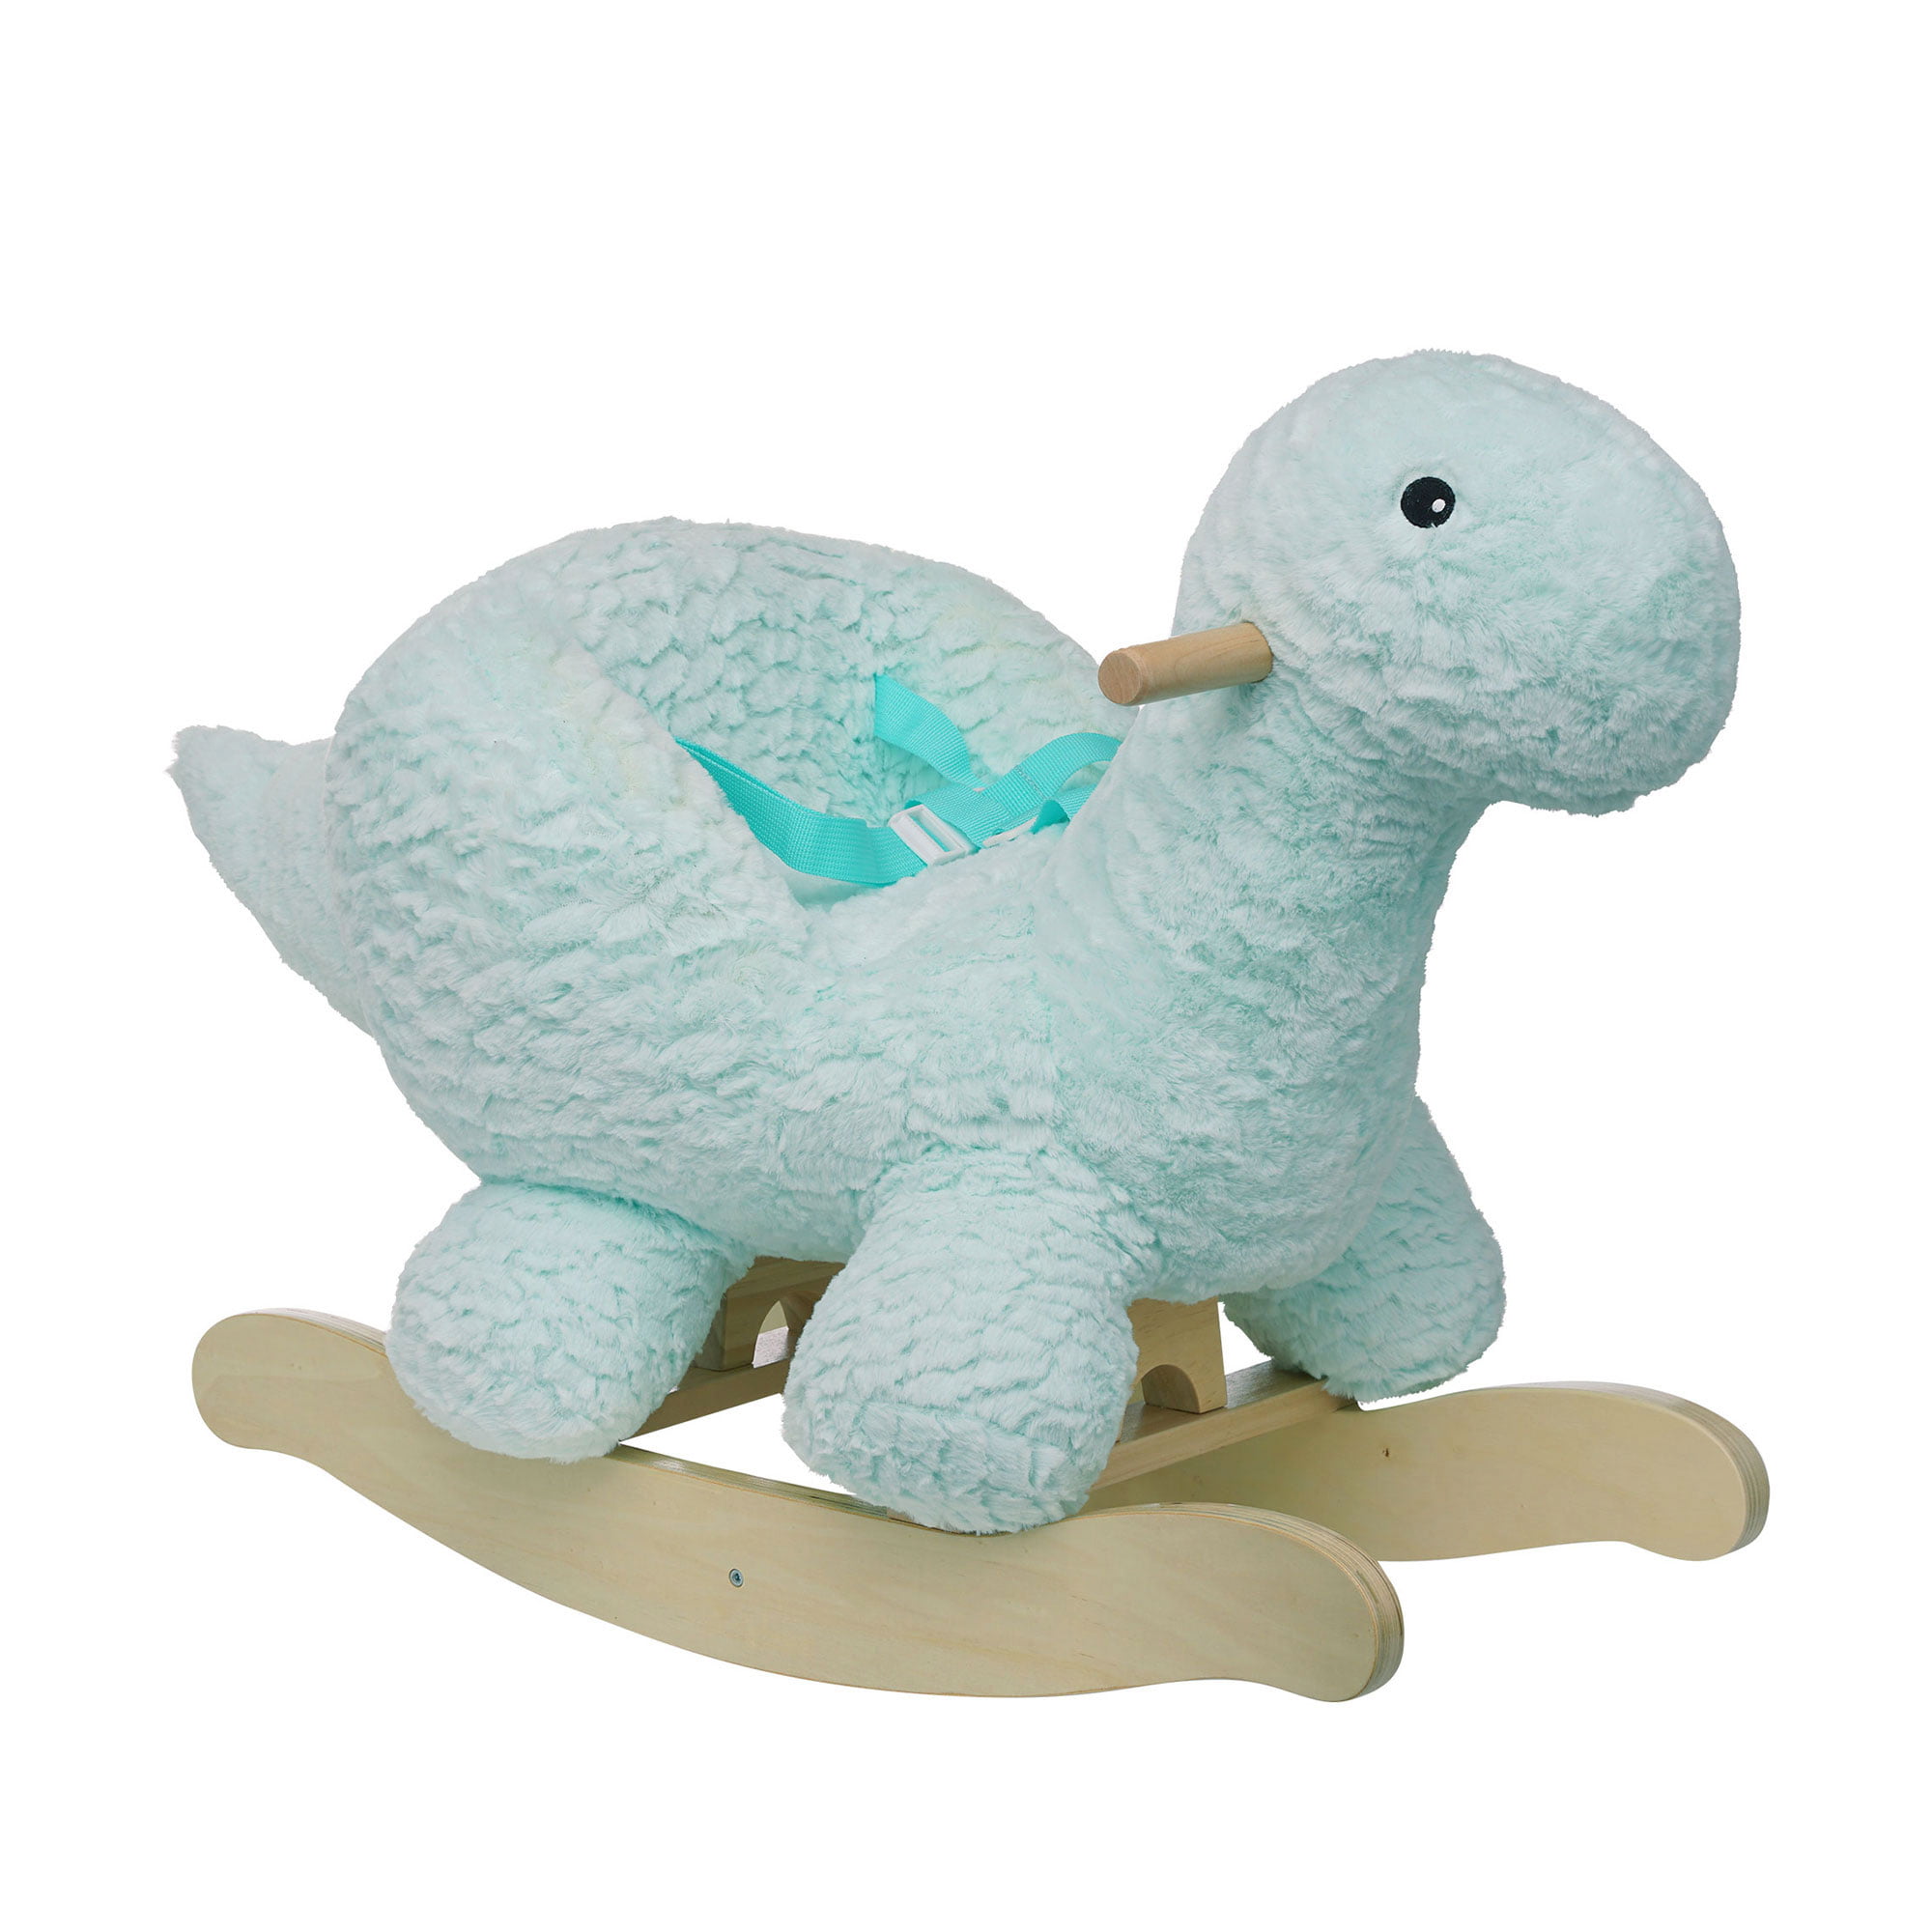 Baby Kids Rocking Horse Dinosaur Rocker Toy With Music Wheels and Seat belt 